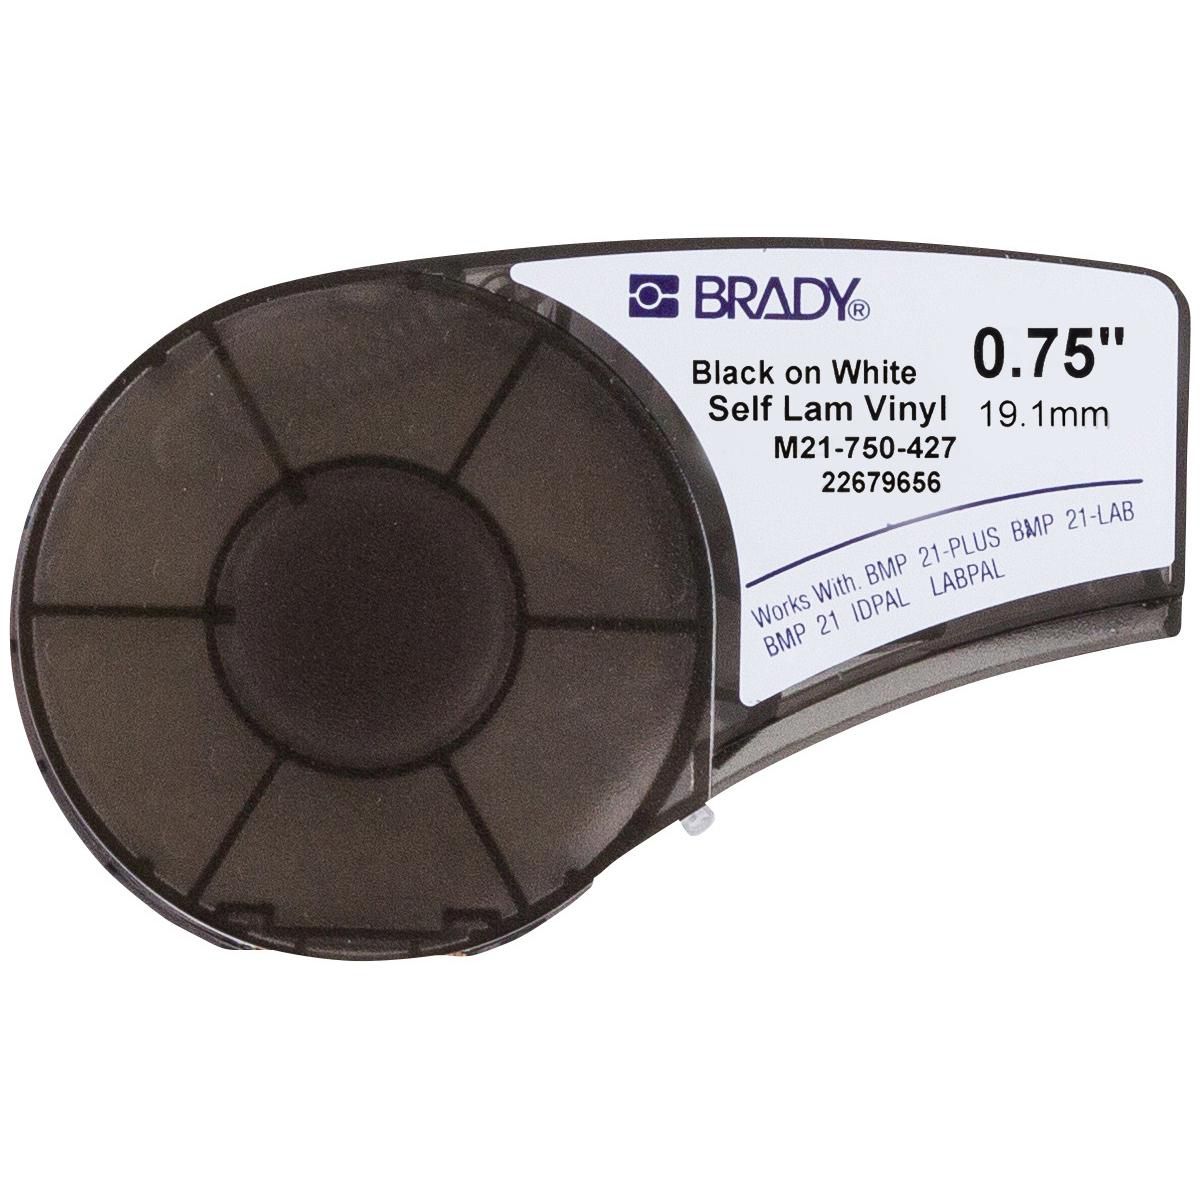 Brady M21-750-427 Self-laminating Vinyl tape 